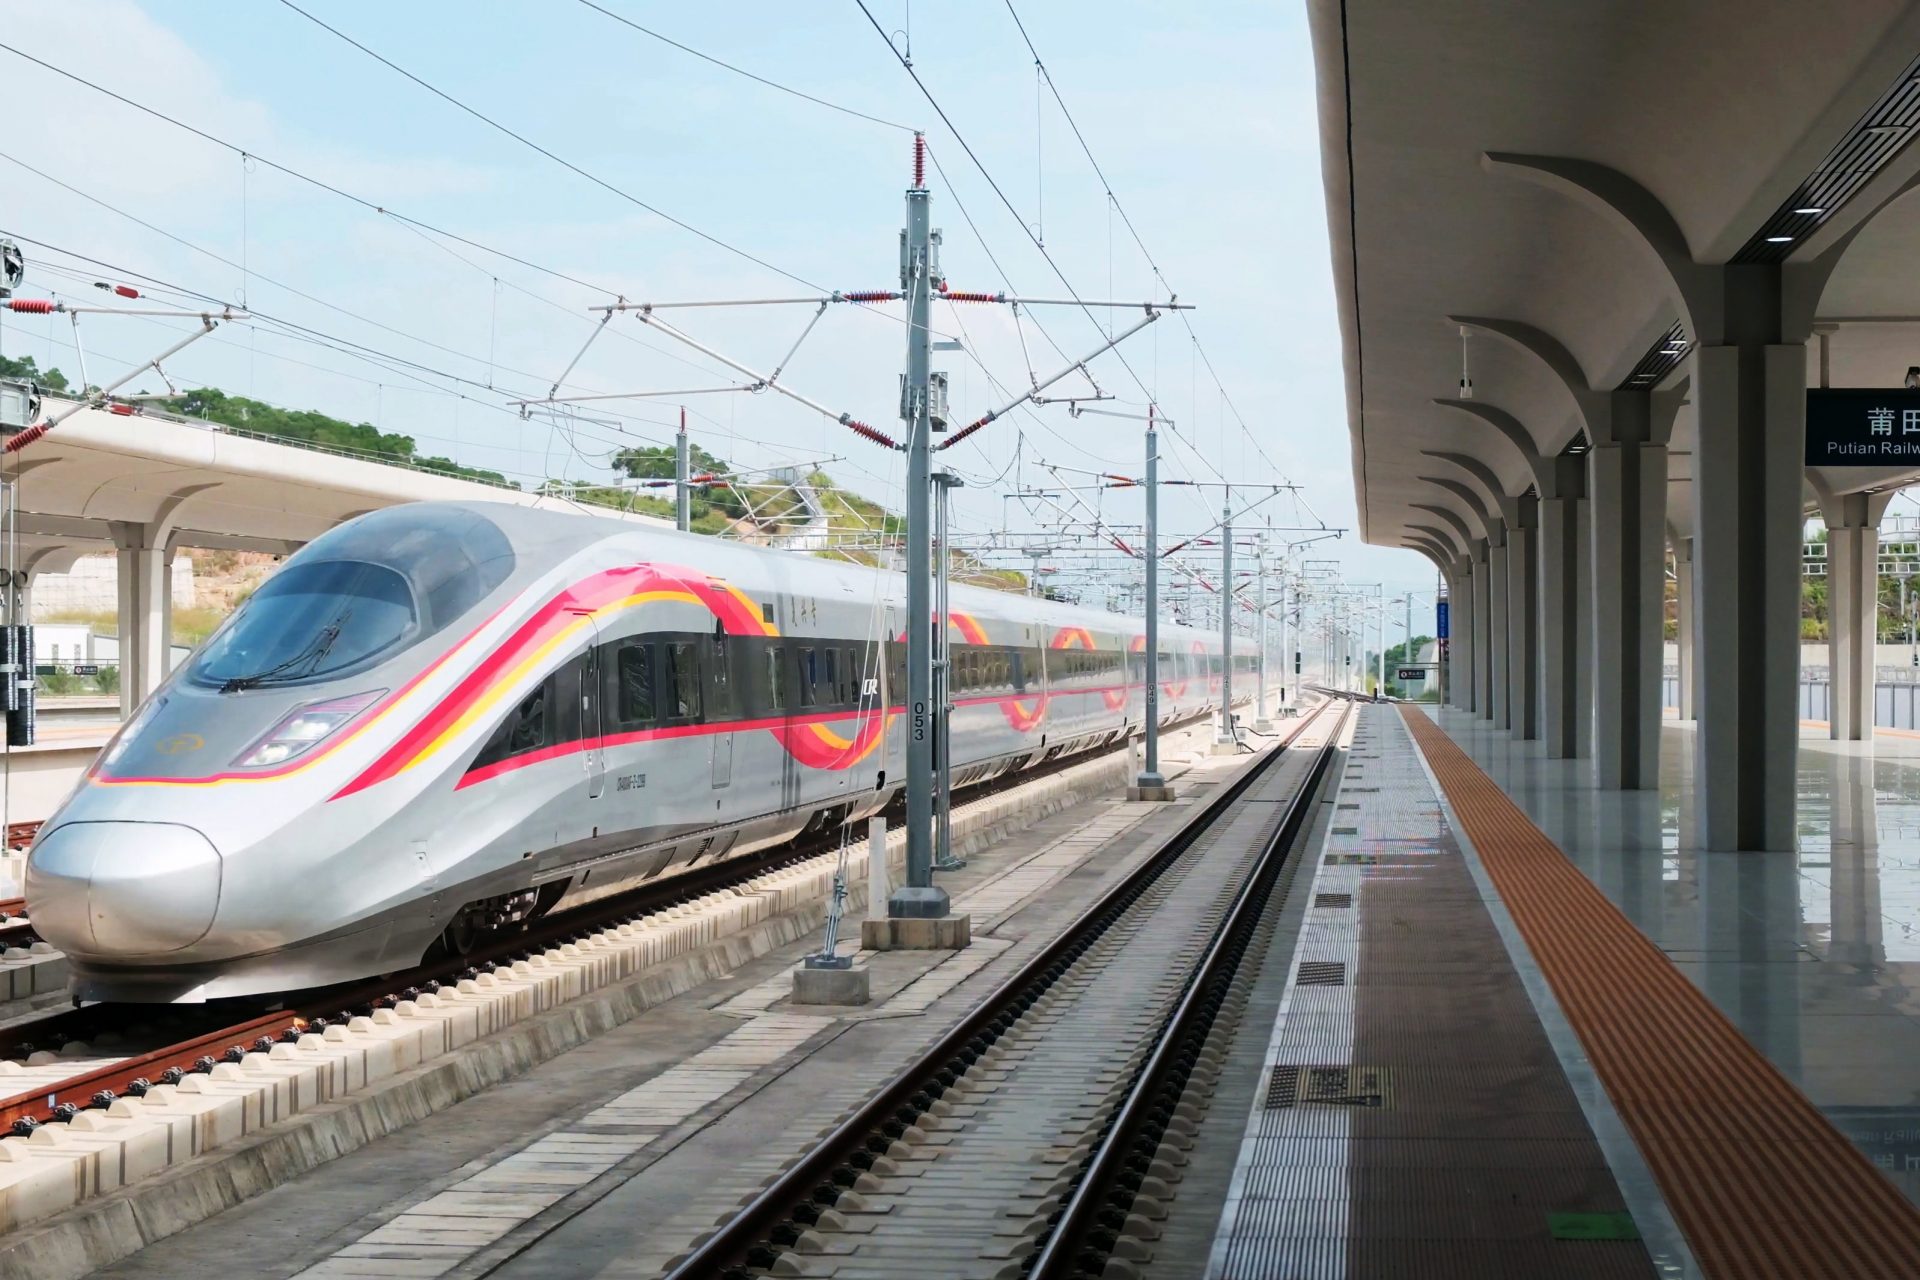 Chinese high-speed tracks vs. US high-speed tracks